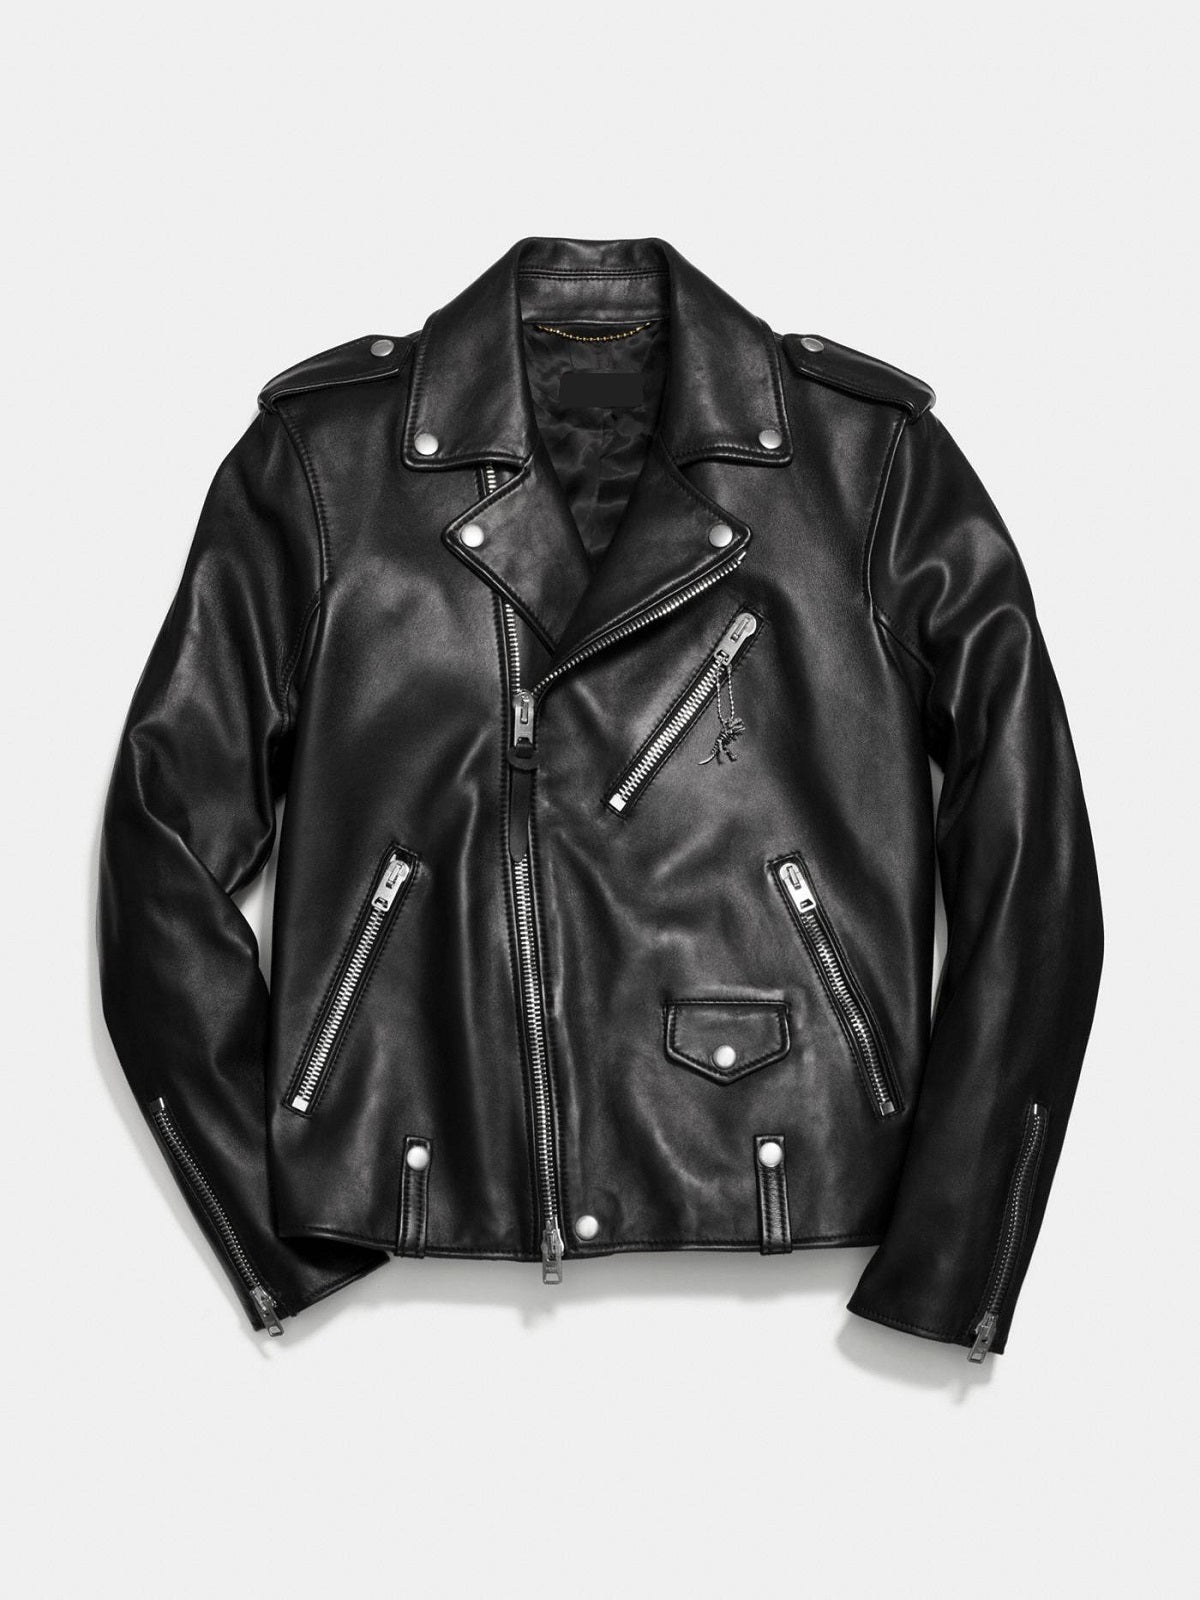 Asymmetrical Mens Black Motorcycle Jacket - LJ